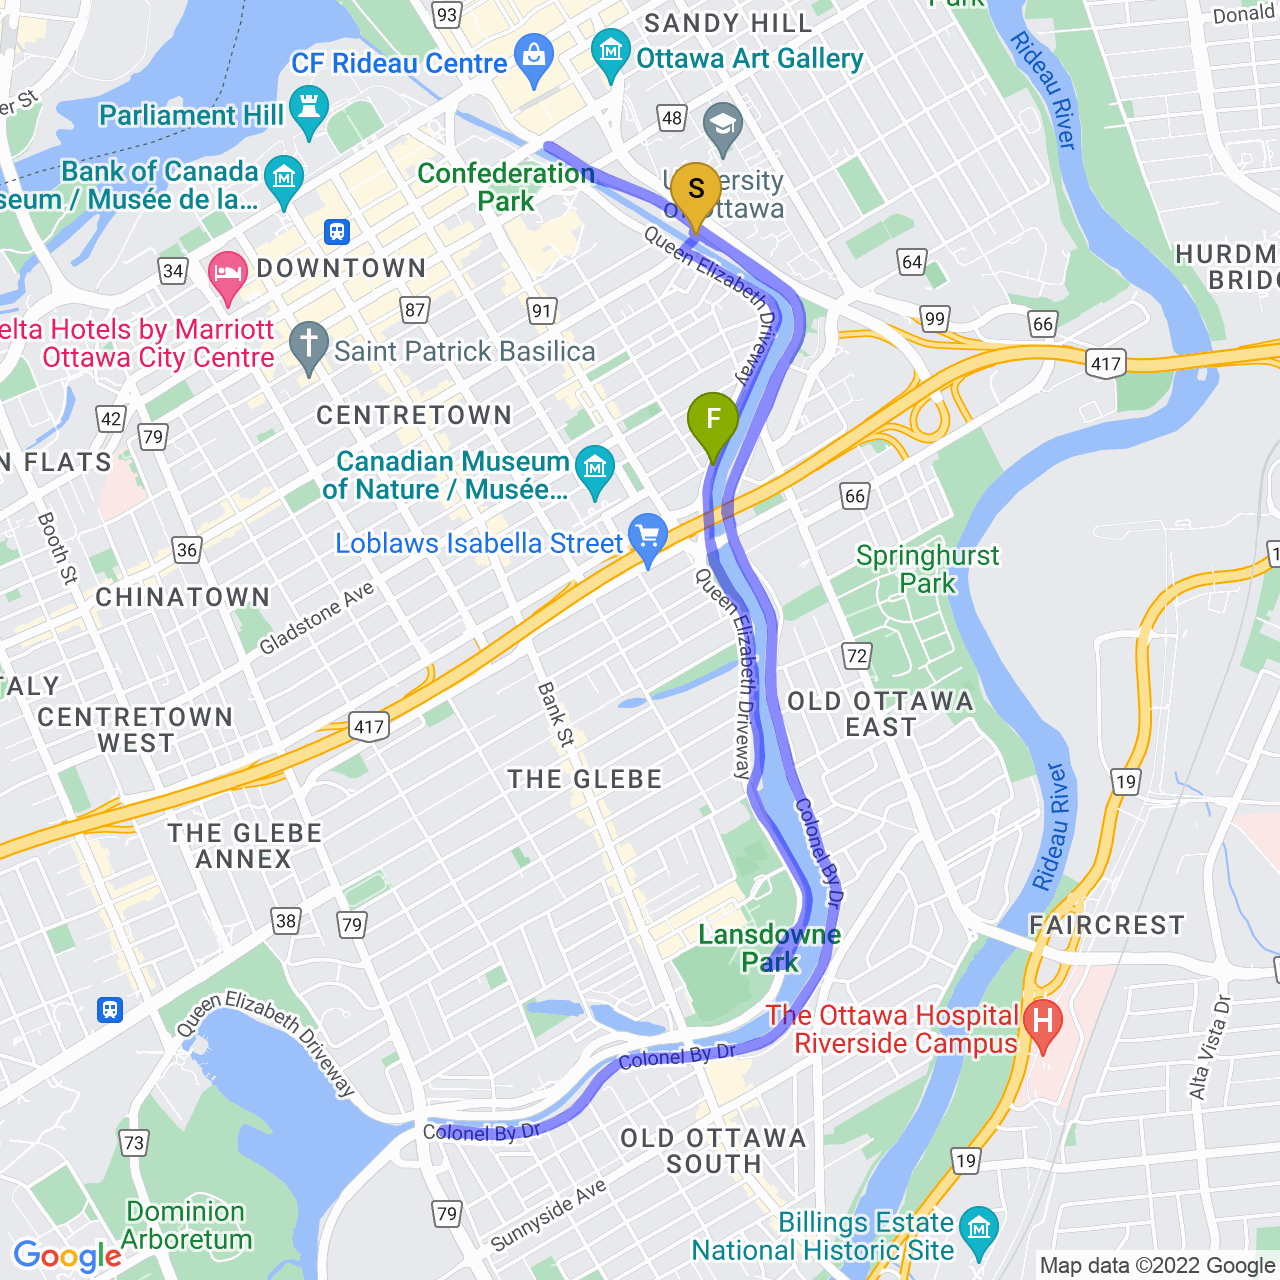 map of Night Ride